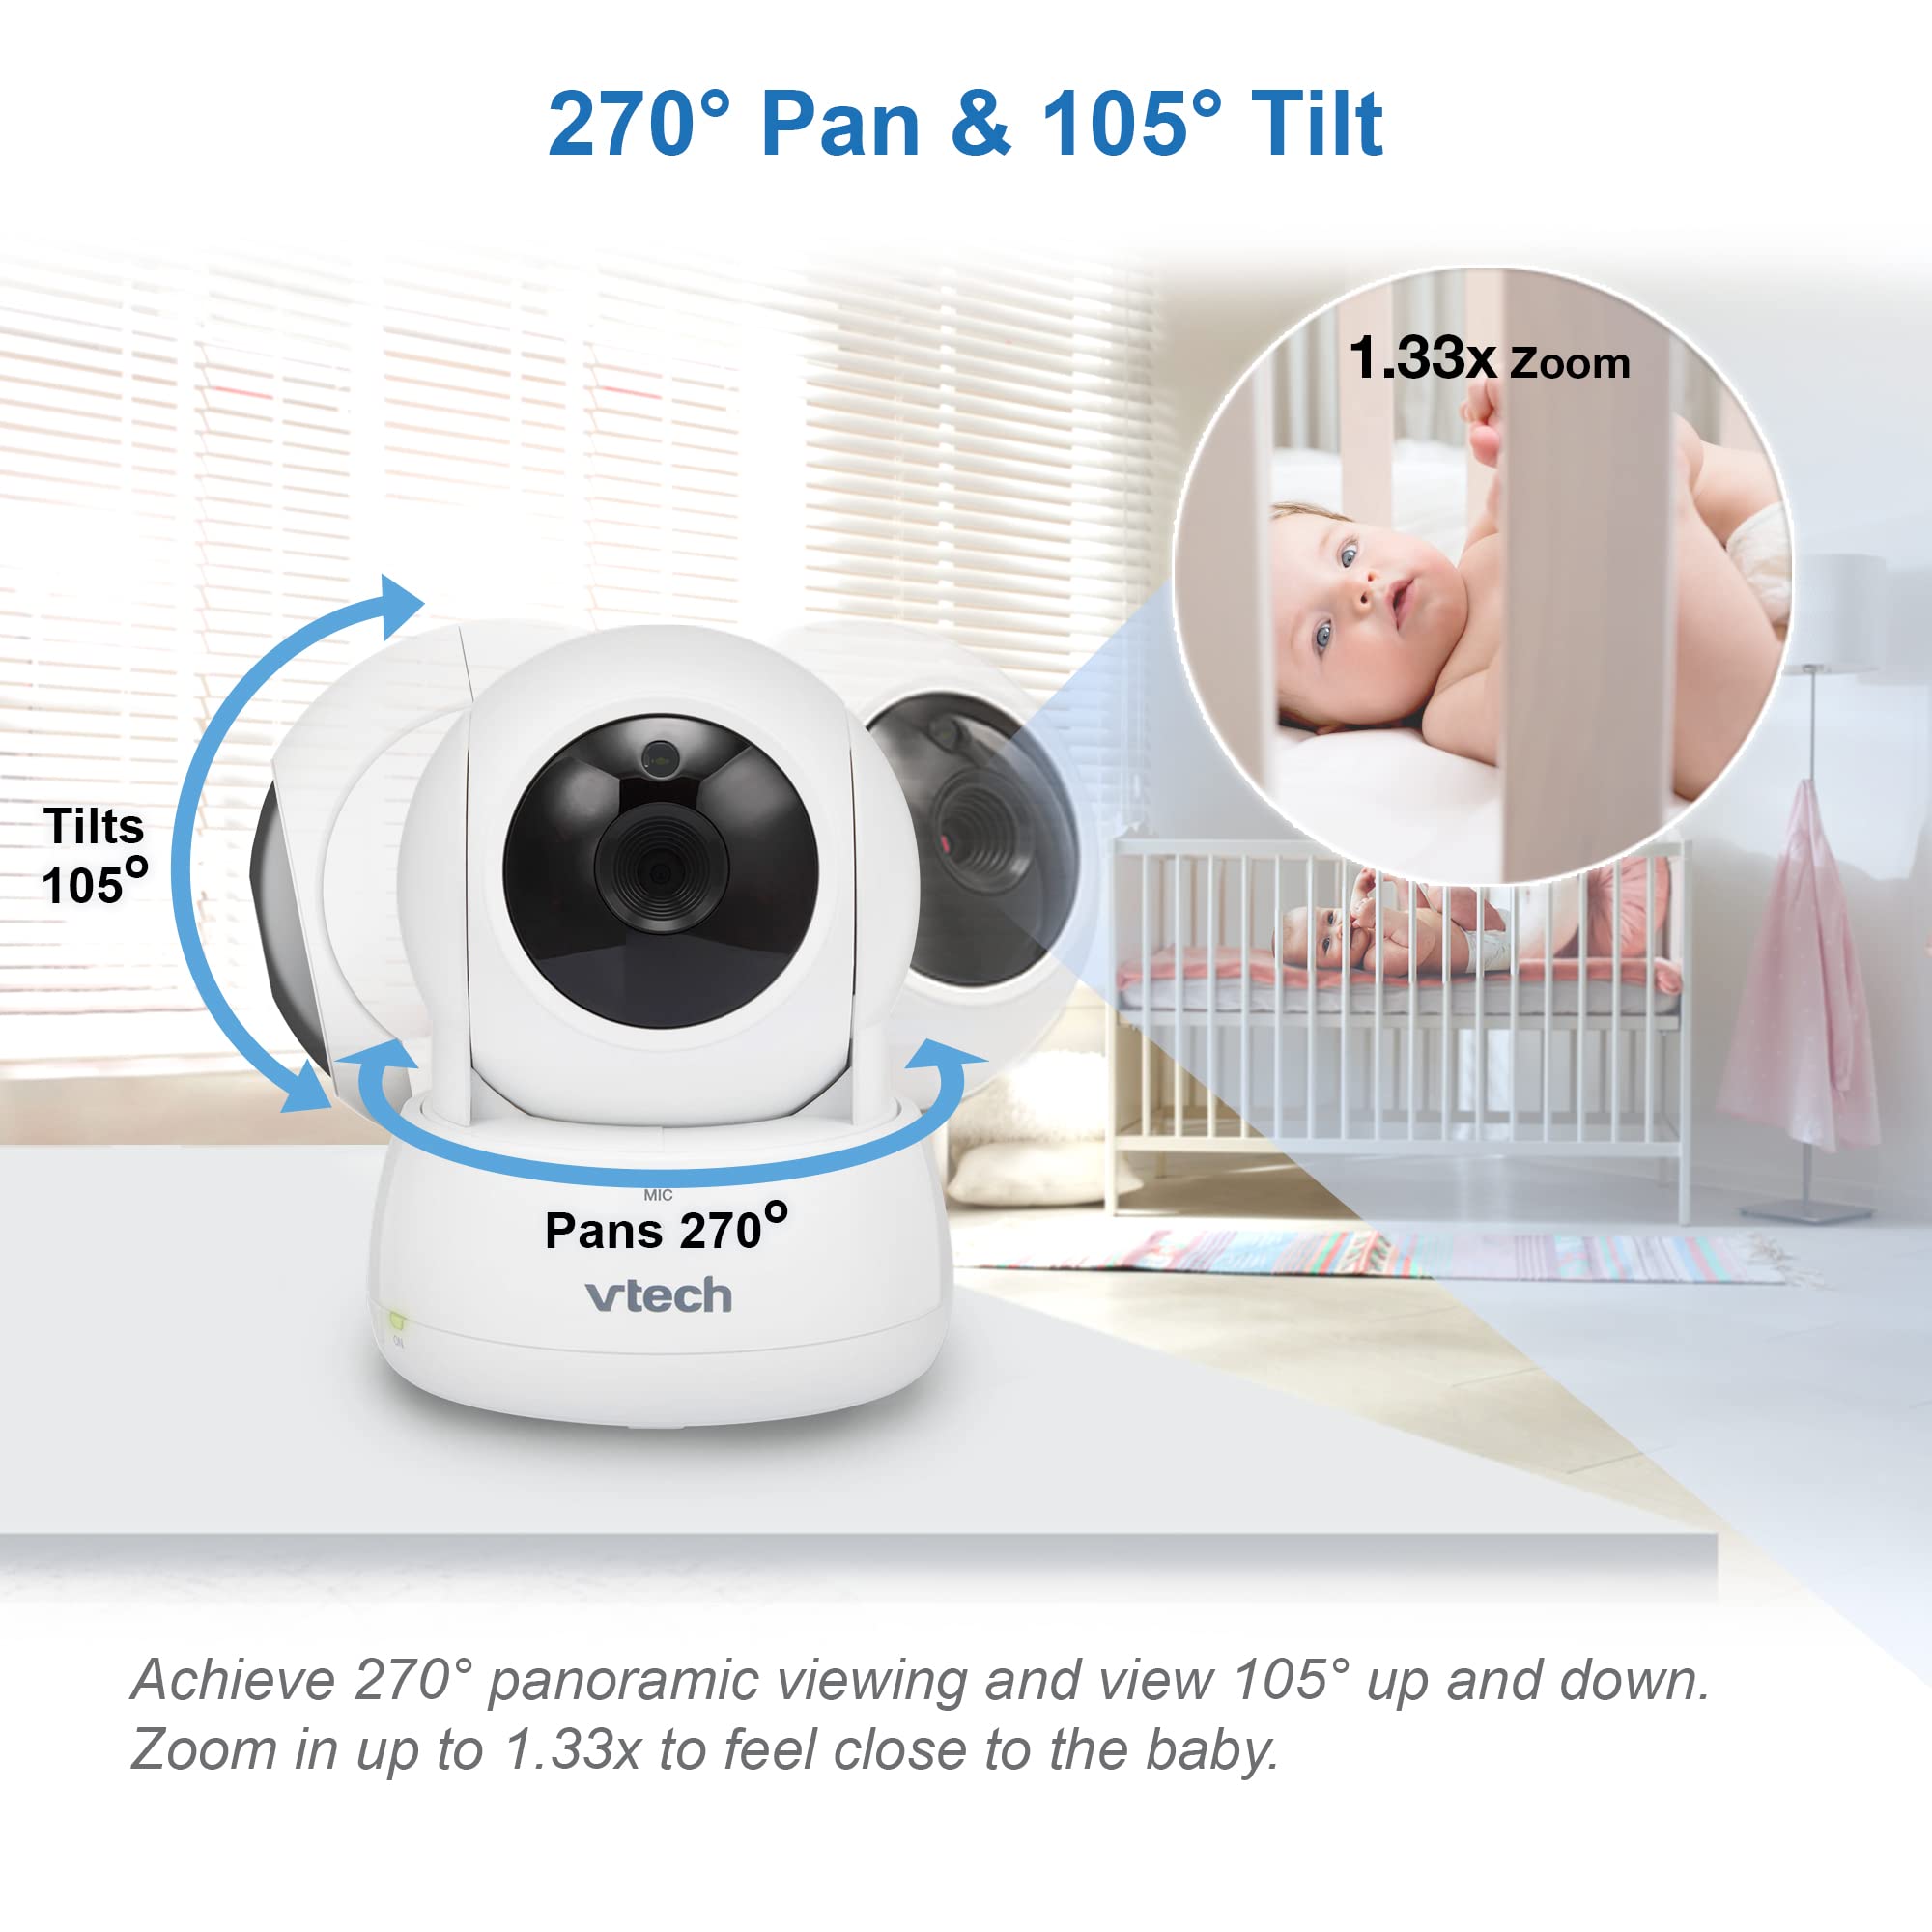 VTech VM924 Remote Pan-Tilt-Zoom Video Baby Monitor, 5